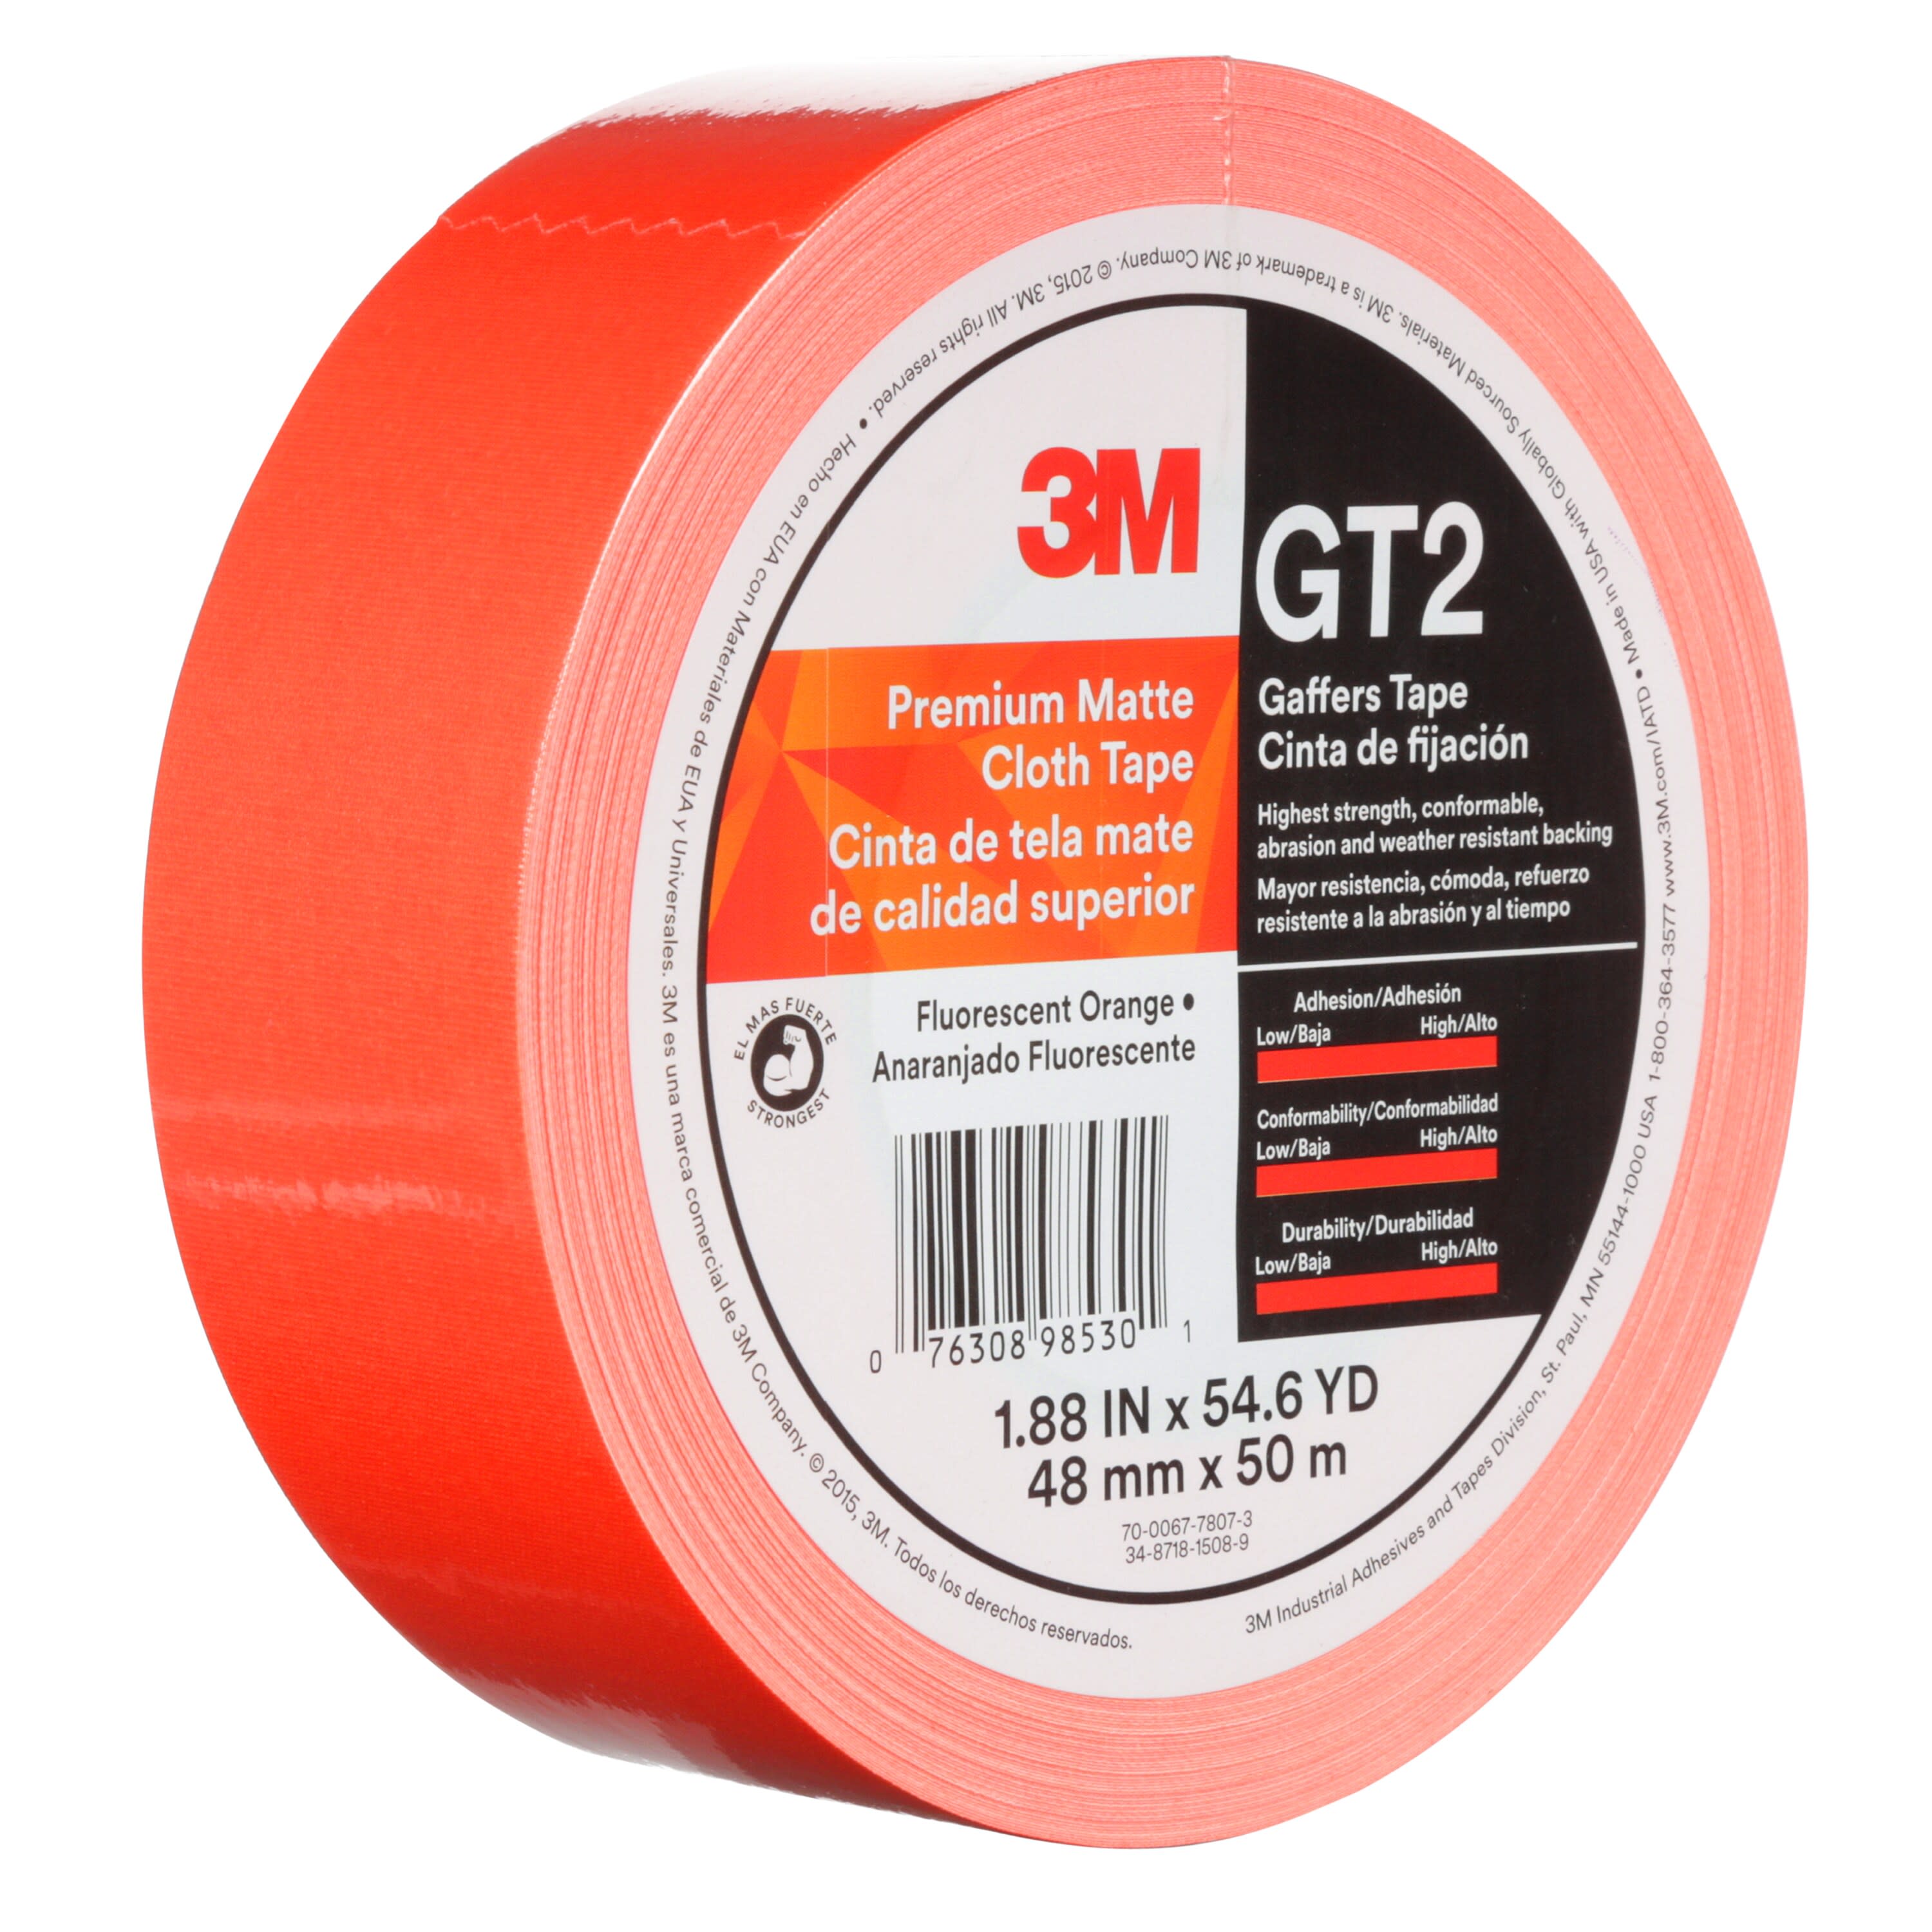 3M™ Premium Matte Cloth (Gaffers) Tape GT2, Fluorescent Orange, 48 mm x
50 m, 11 mil, 24 per case